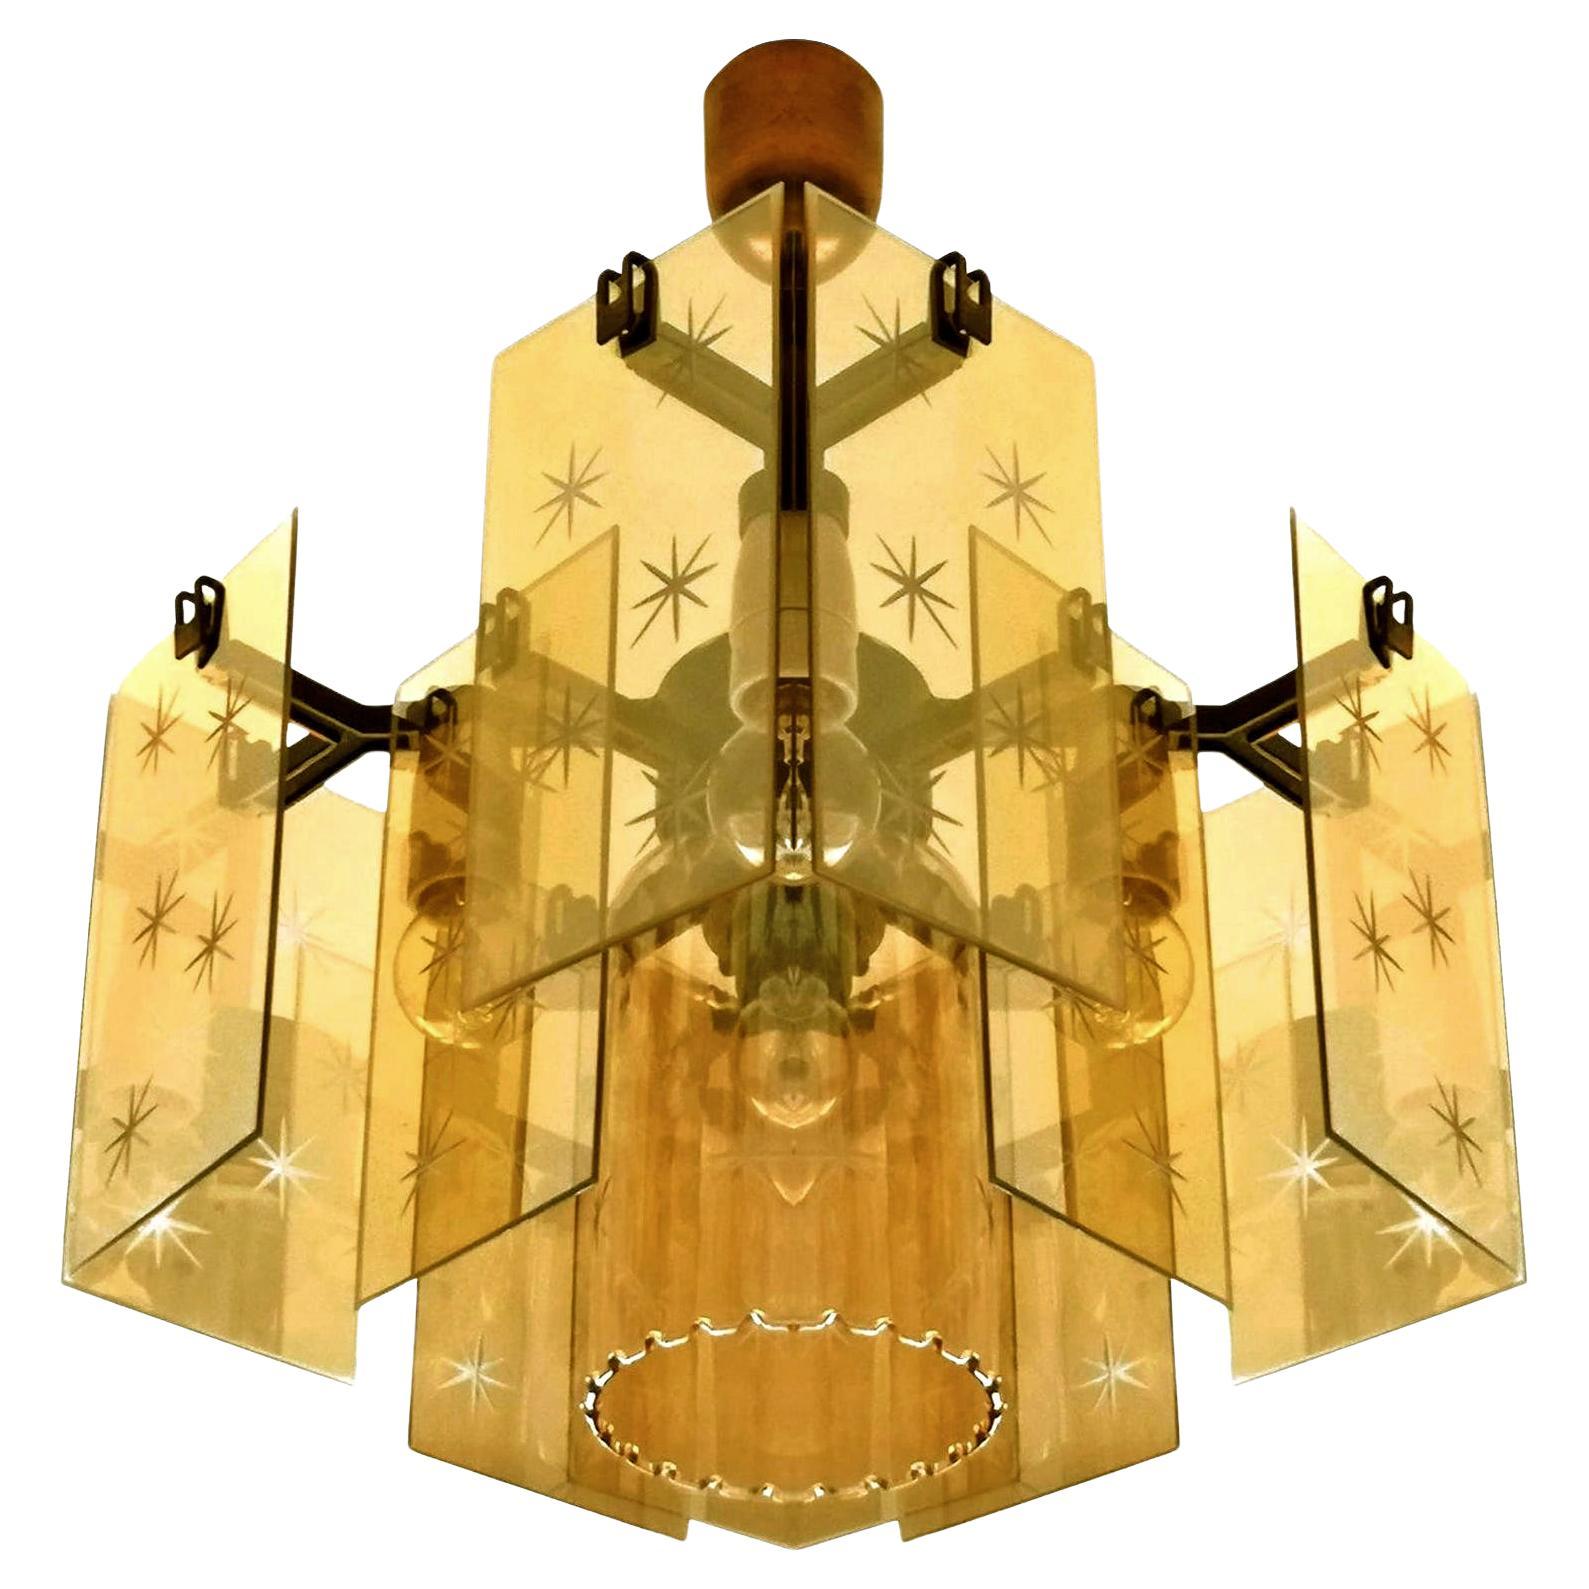 Italian Mid-Century Modern Smoked Amber Gold Cut Glass Fontana Style Chandelier